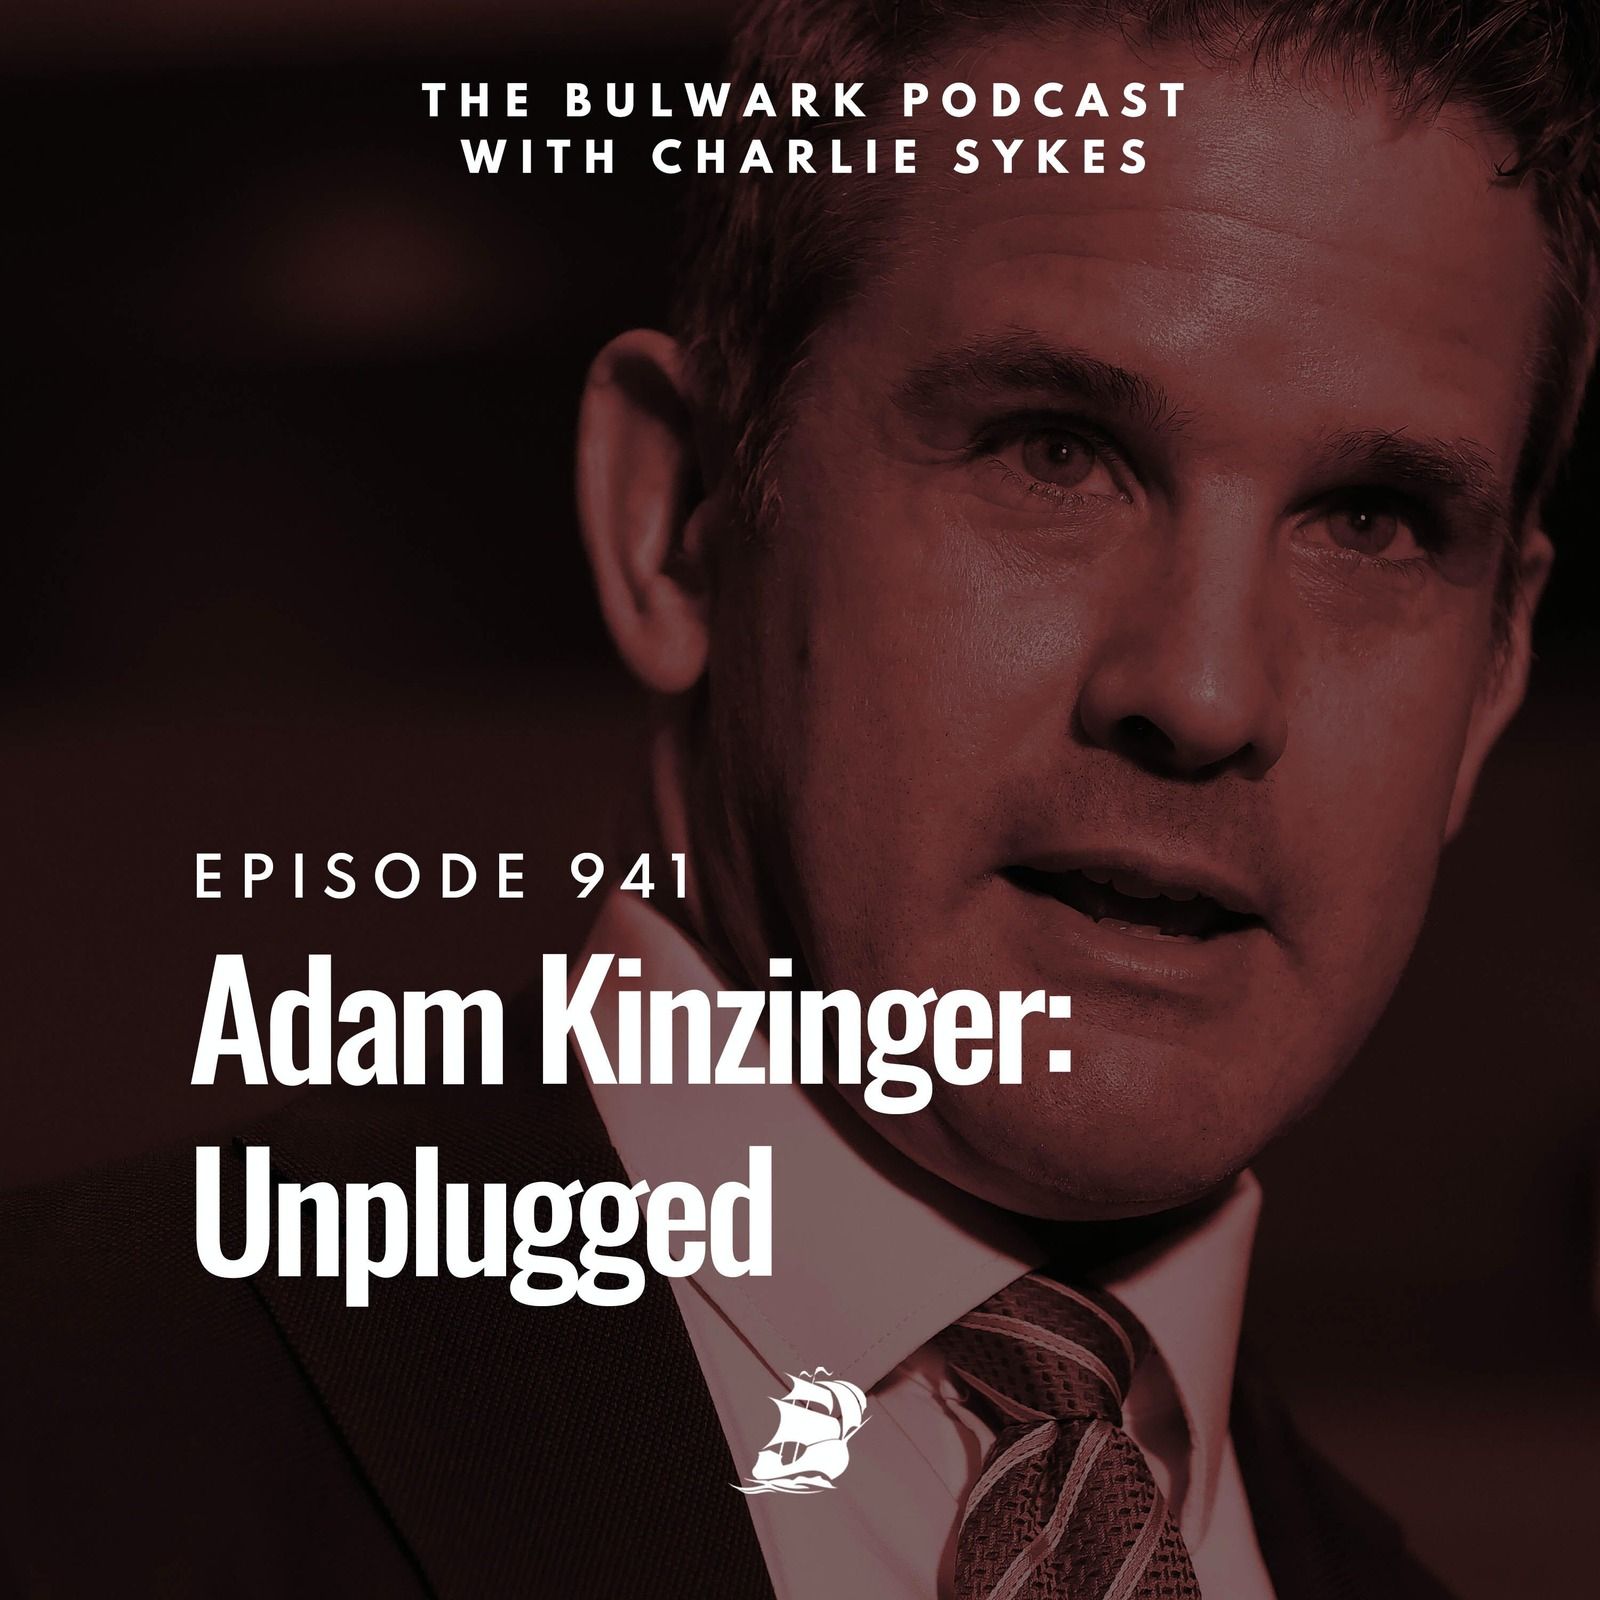 Adam Kinzinger: Unplugged by The Bulwark Podcast